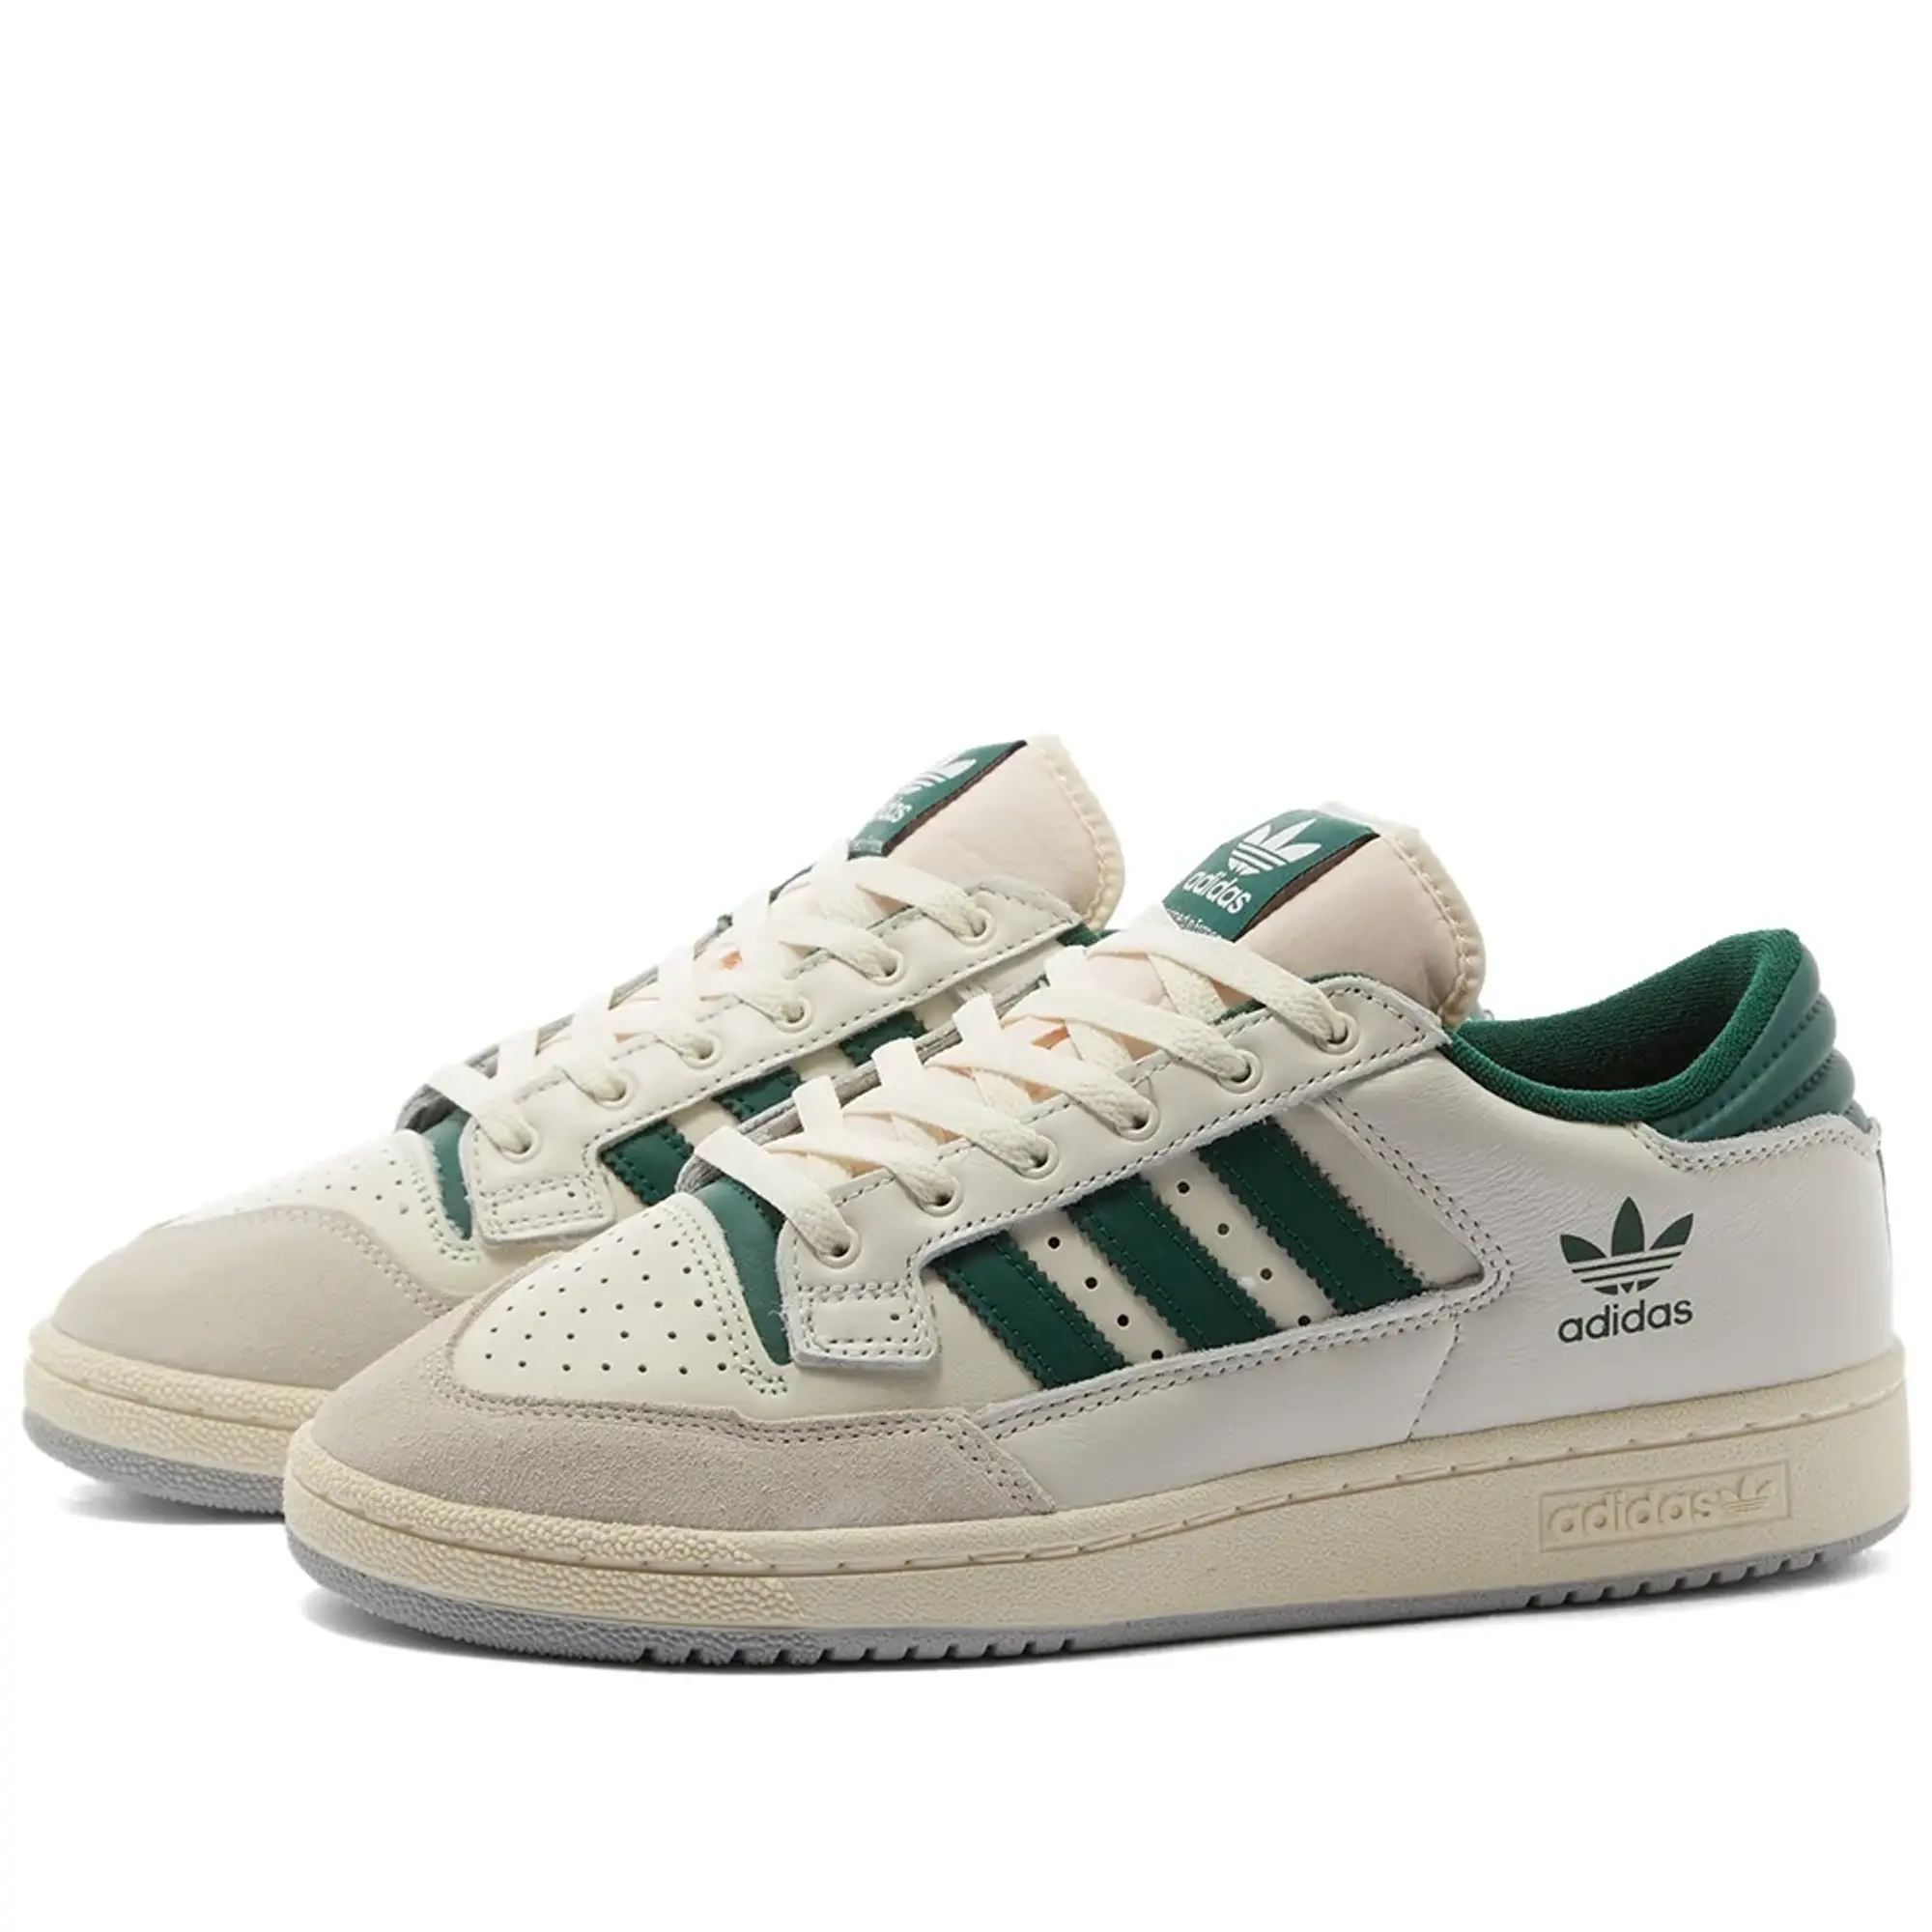 Adidas Centennial 85 Low White/Dark Green